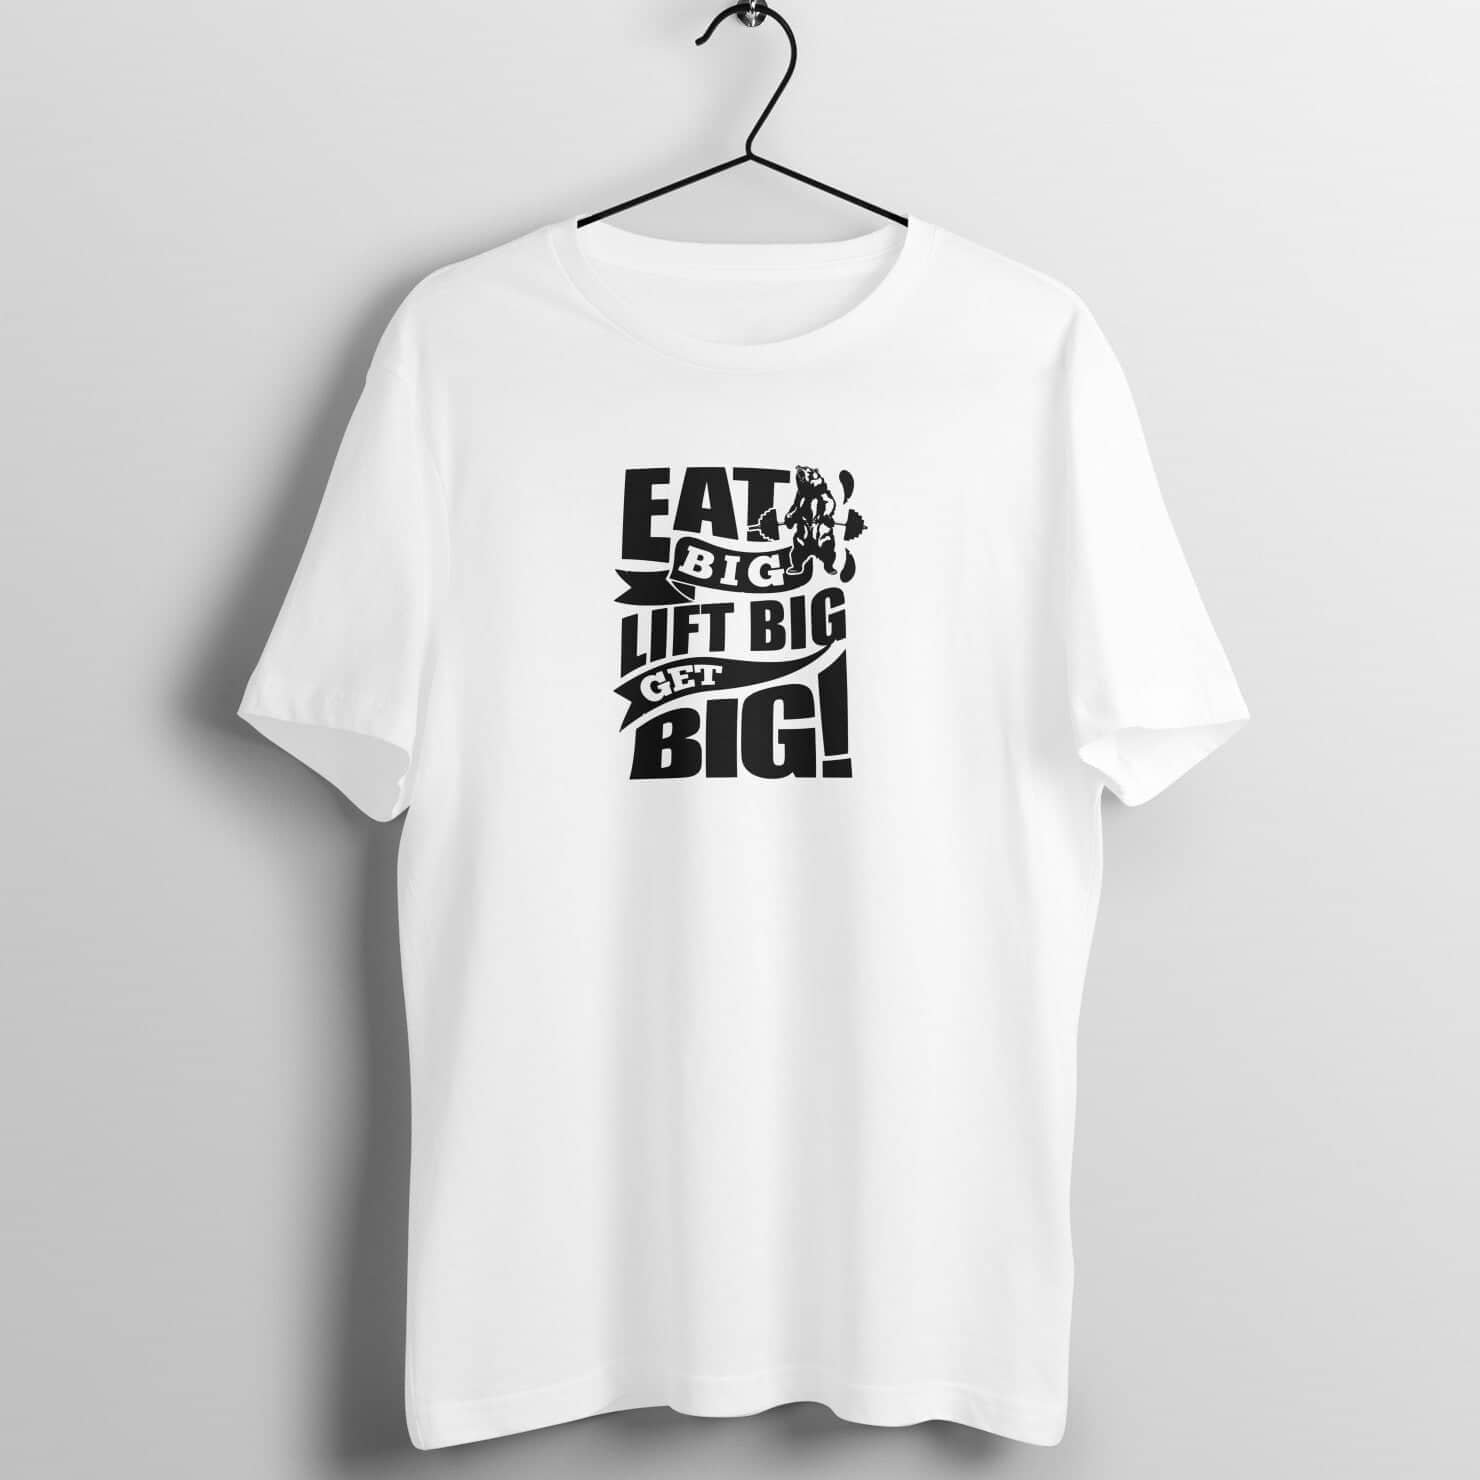 Eat Big Lift Big Get Big Supreme Gym T Shirt for Men and Women freeshipping - Catch My Drift India